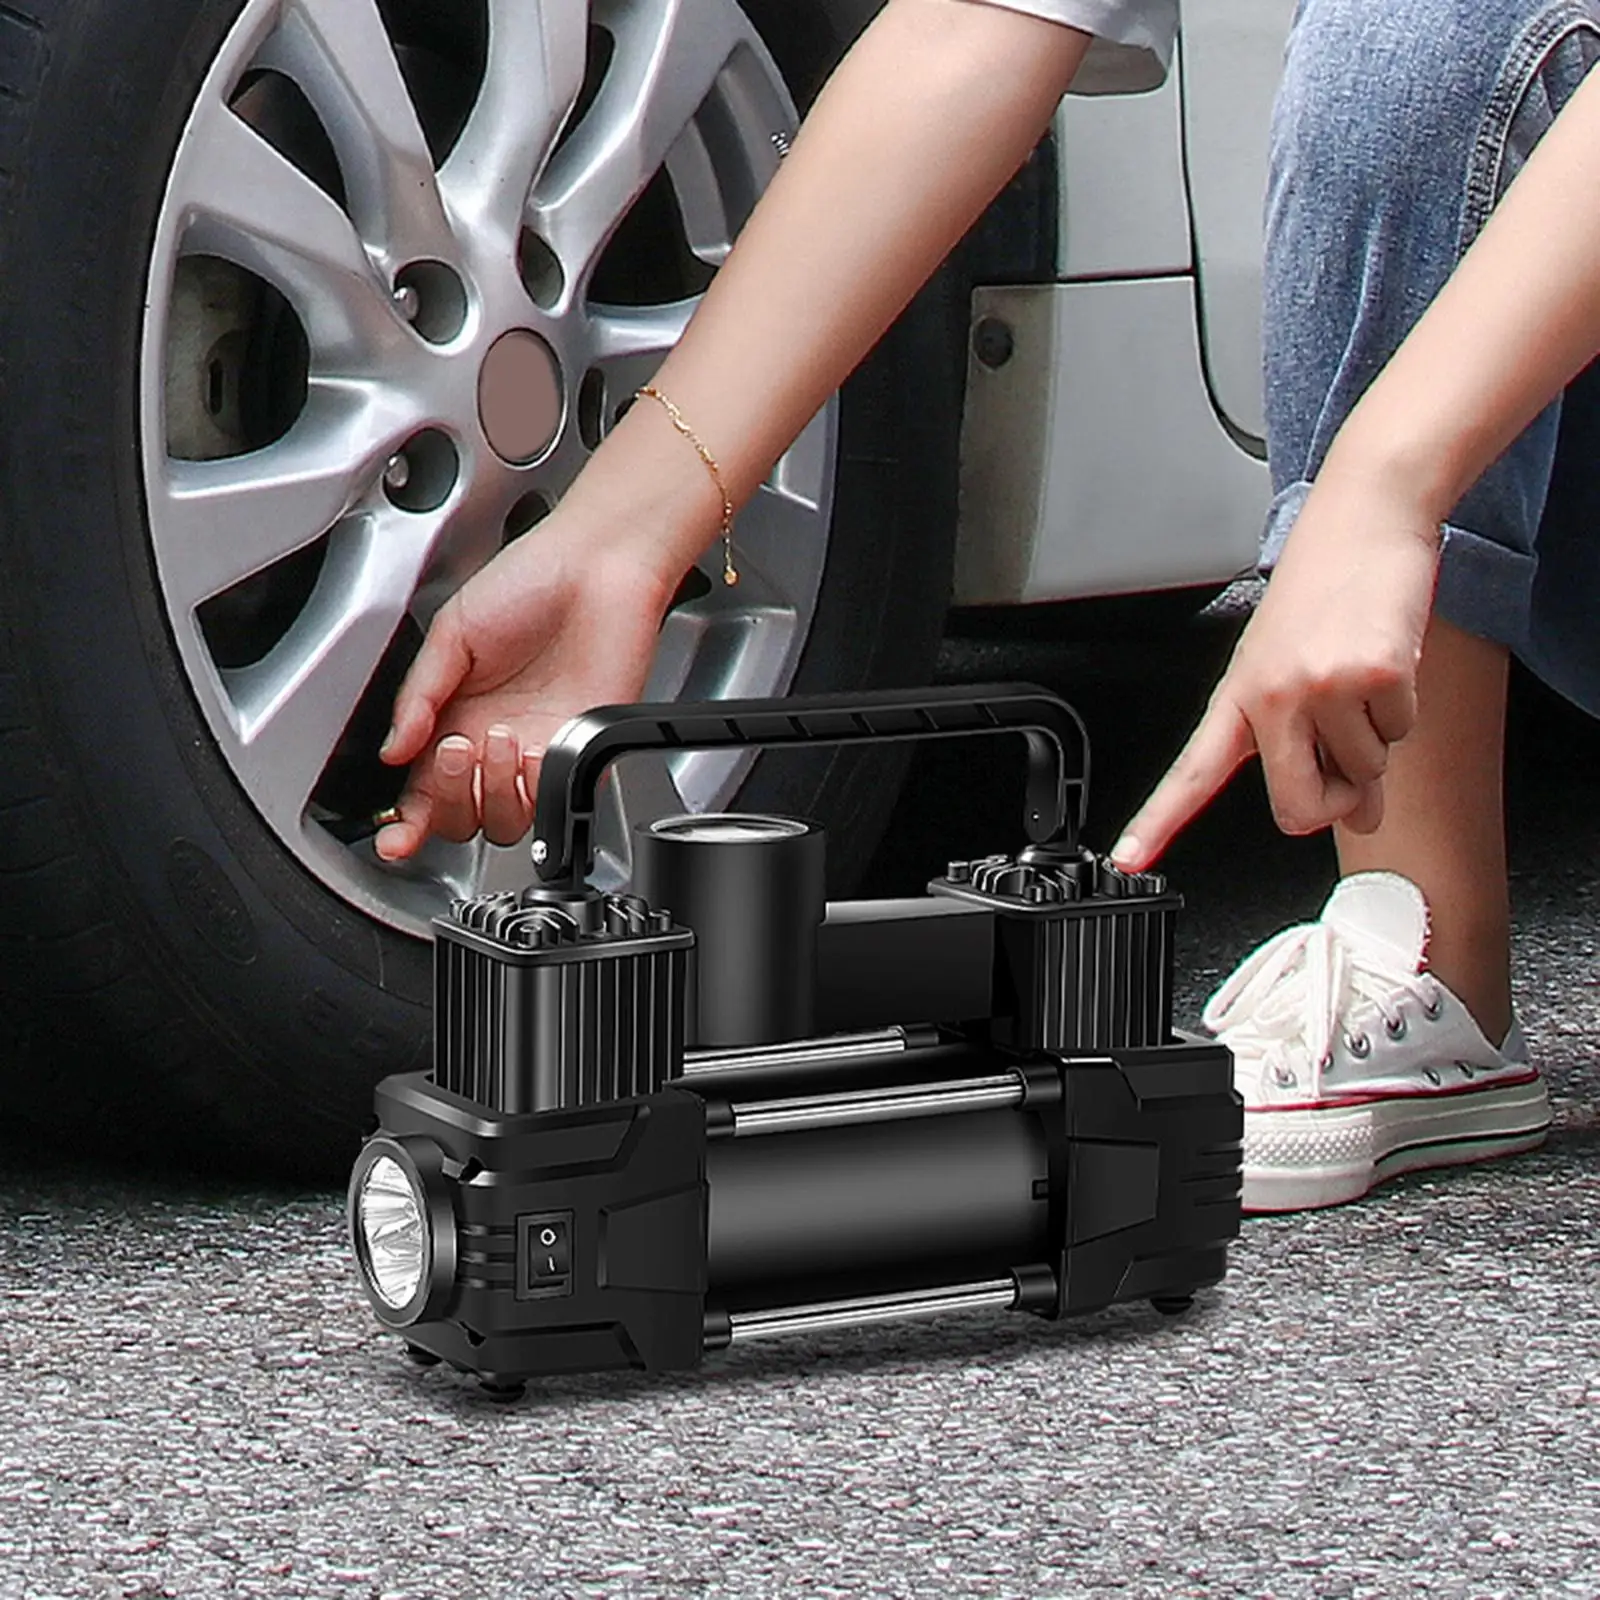 1x Car Tyre Inflator Air Pump 12V Pressure Gauge Display Digital Display Air Compressor Tire Inflator Fit for Motorcycles Home